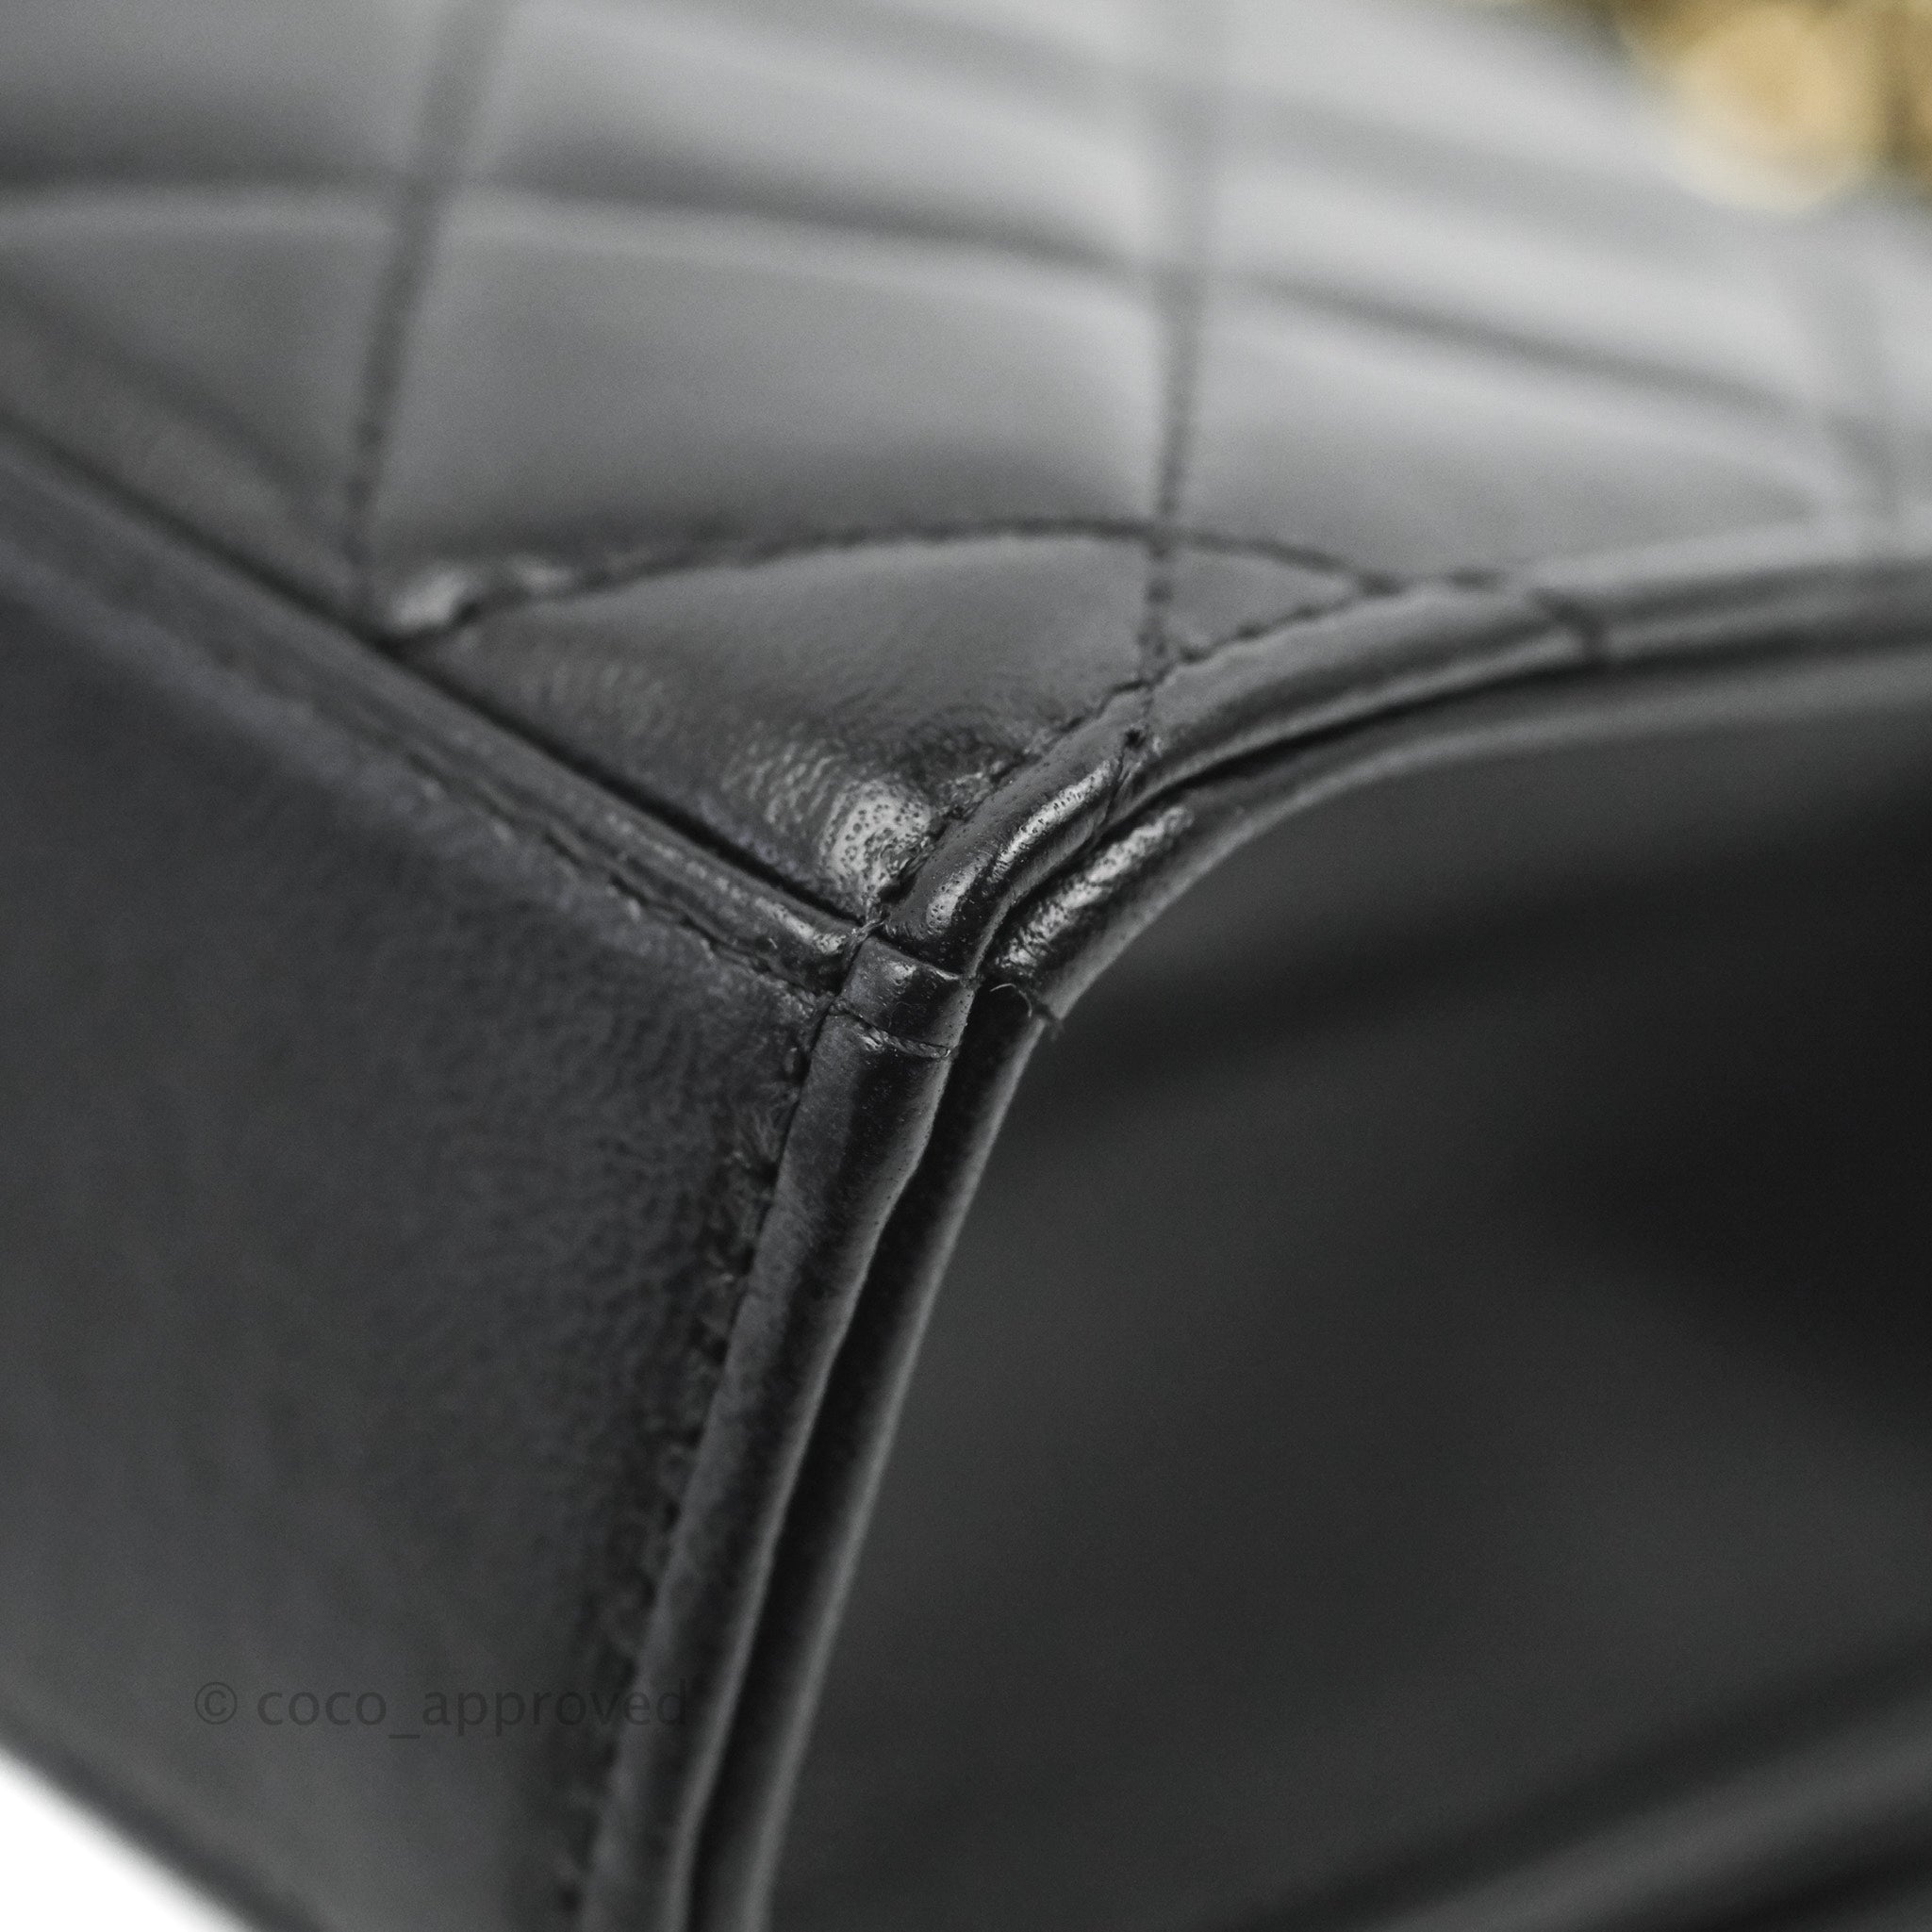 CHANEL 2.55 Double Flap Medium Chain Shoulder Bag Black Lambskin